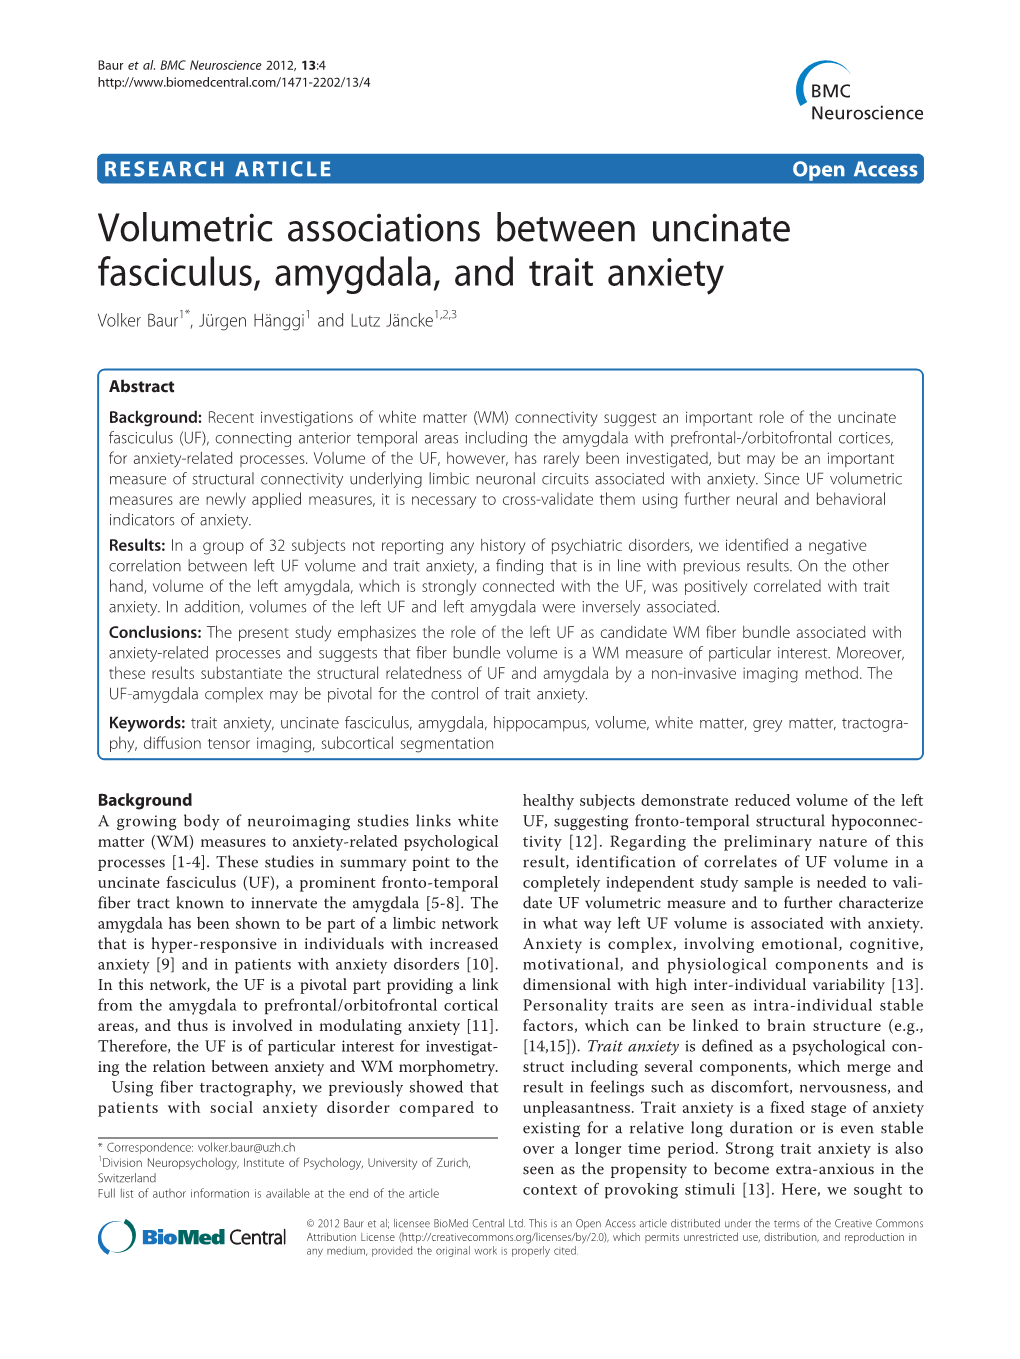 Volumetric Associations Between Uncinate Fasciculus, Amygdala, and Trait Anxiety Volker Baur1*, Jürgen Hänggi1 and Lutz Jäncke1,2,3